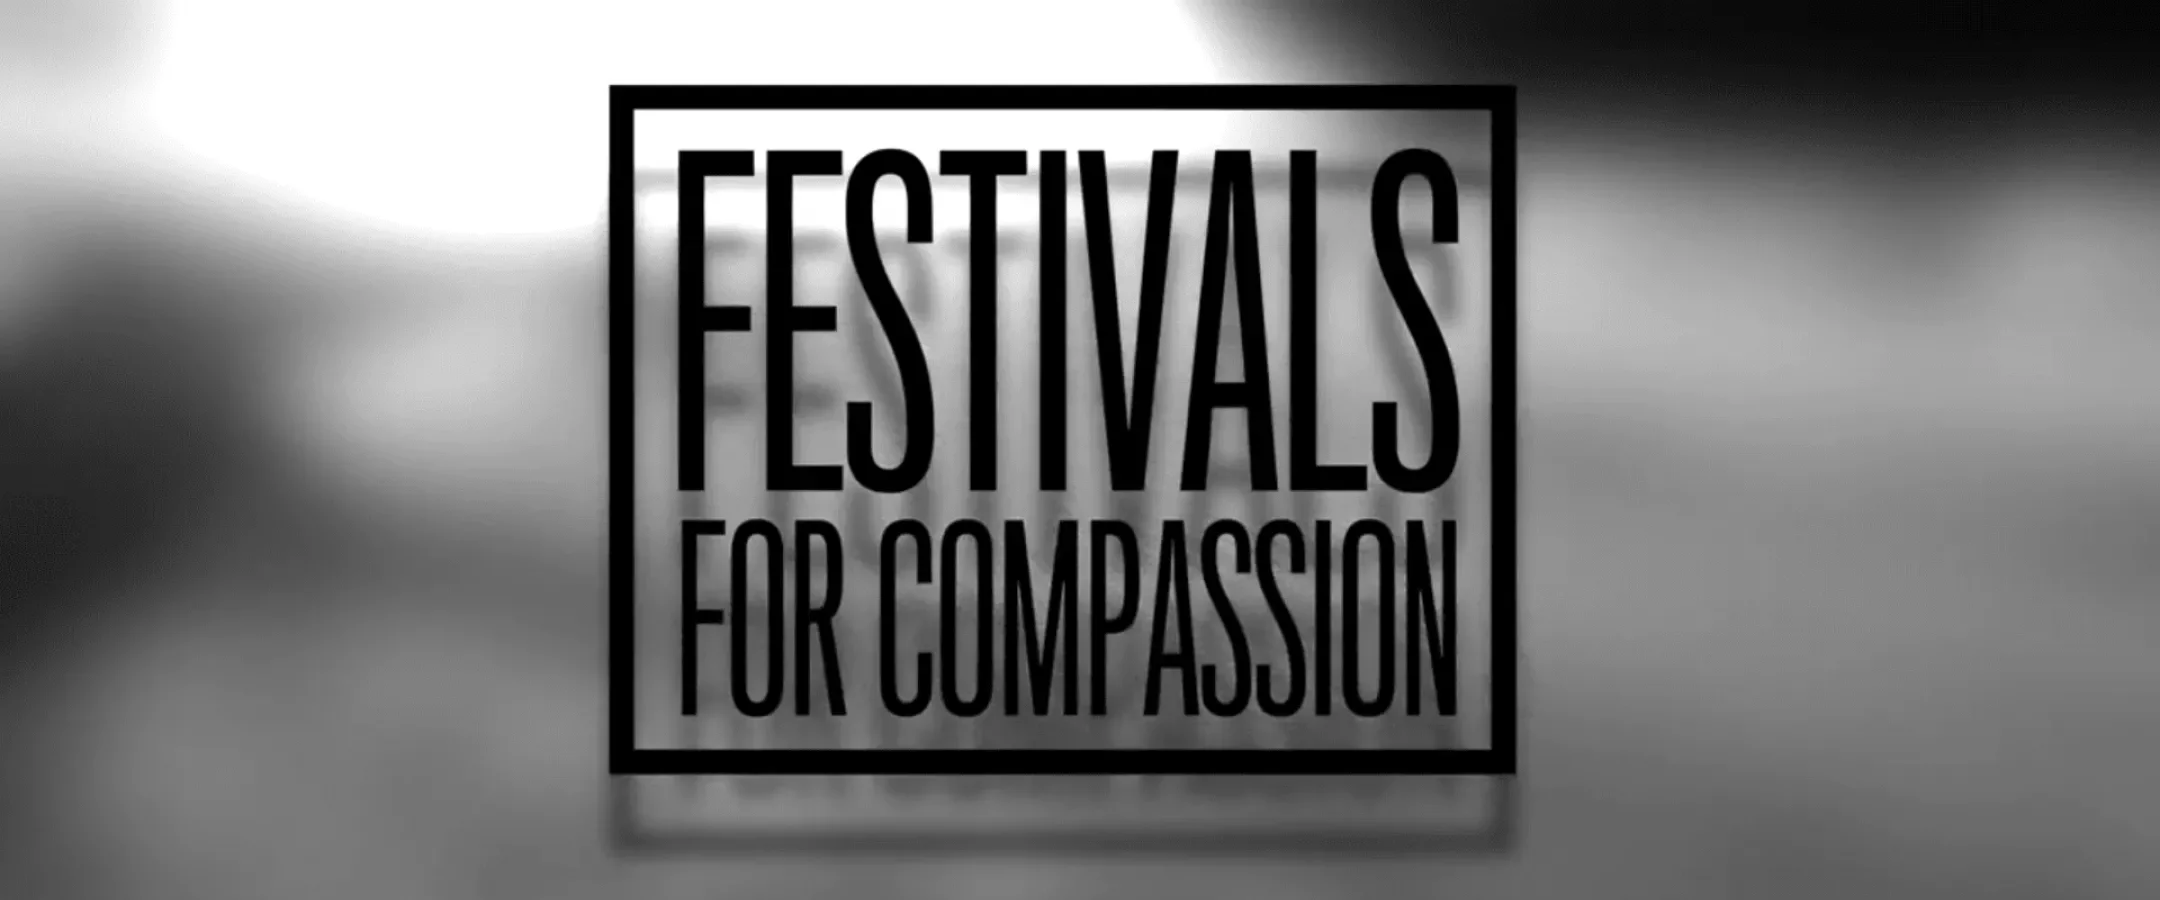 Festivals for Compassion